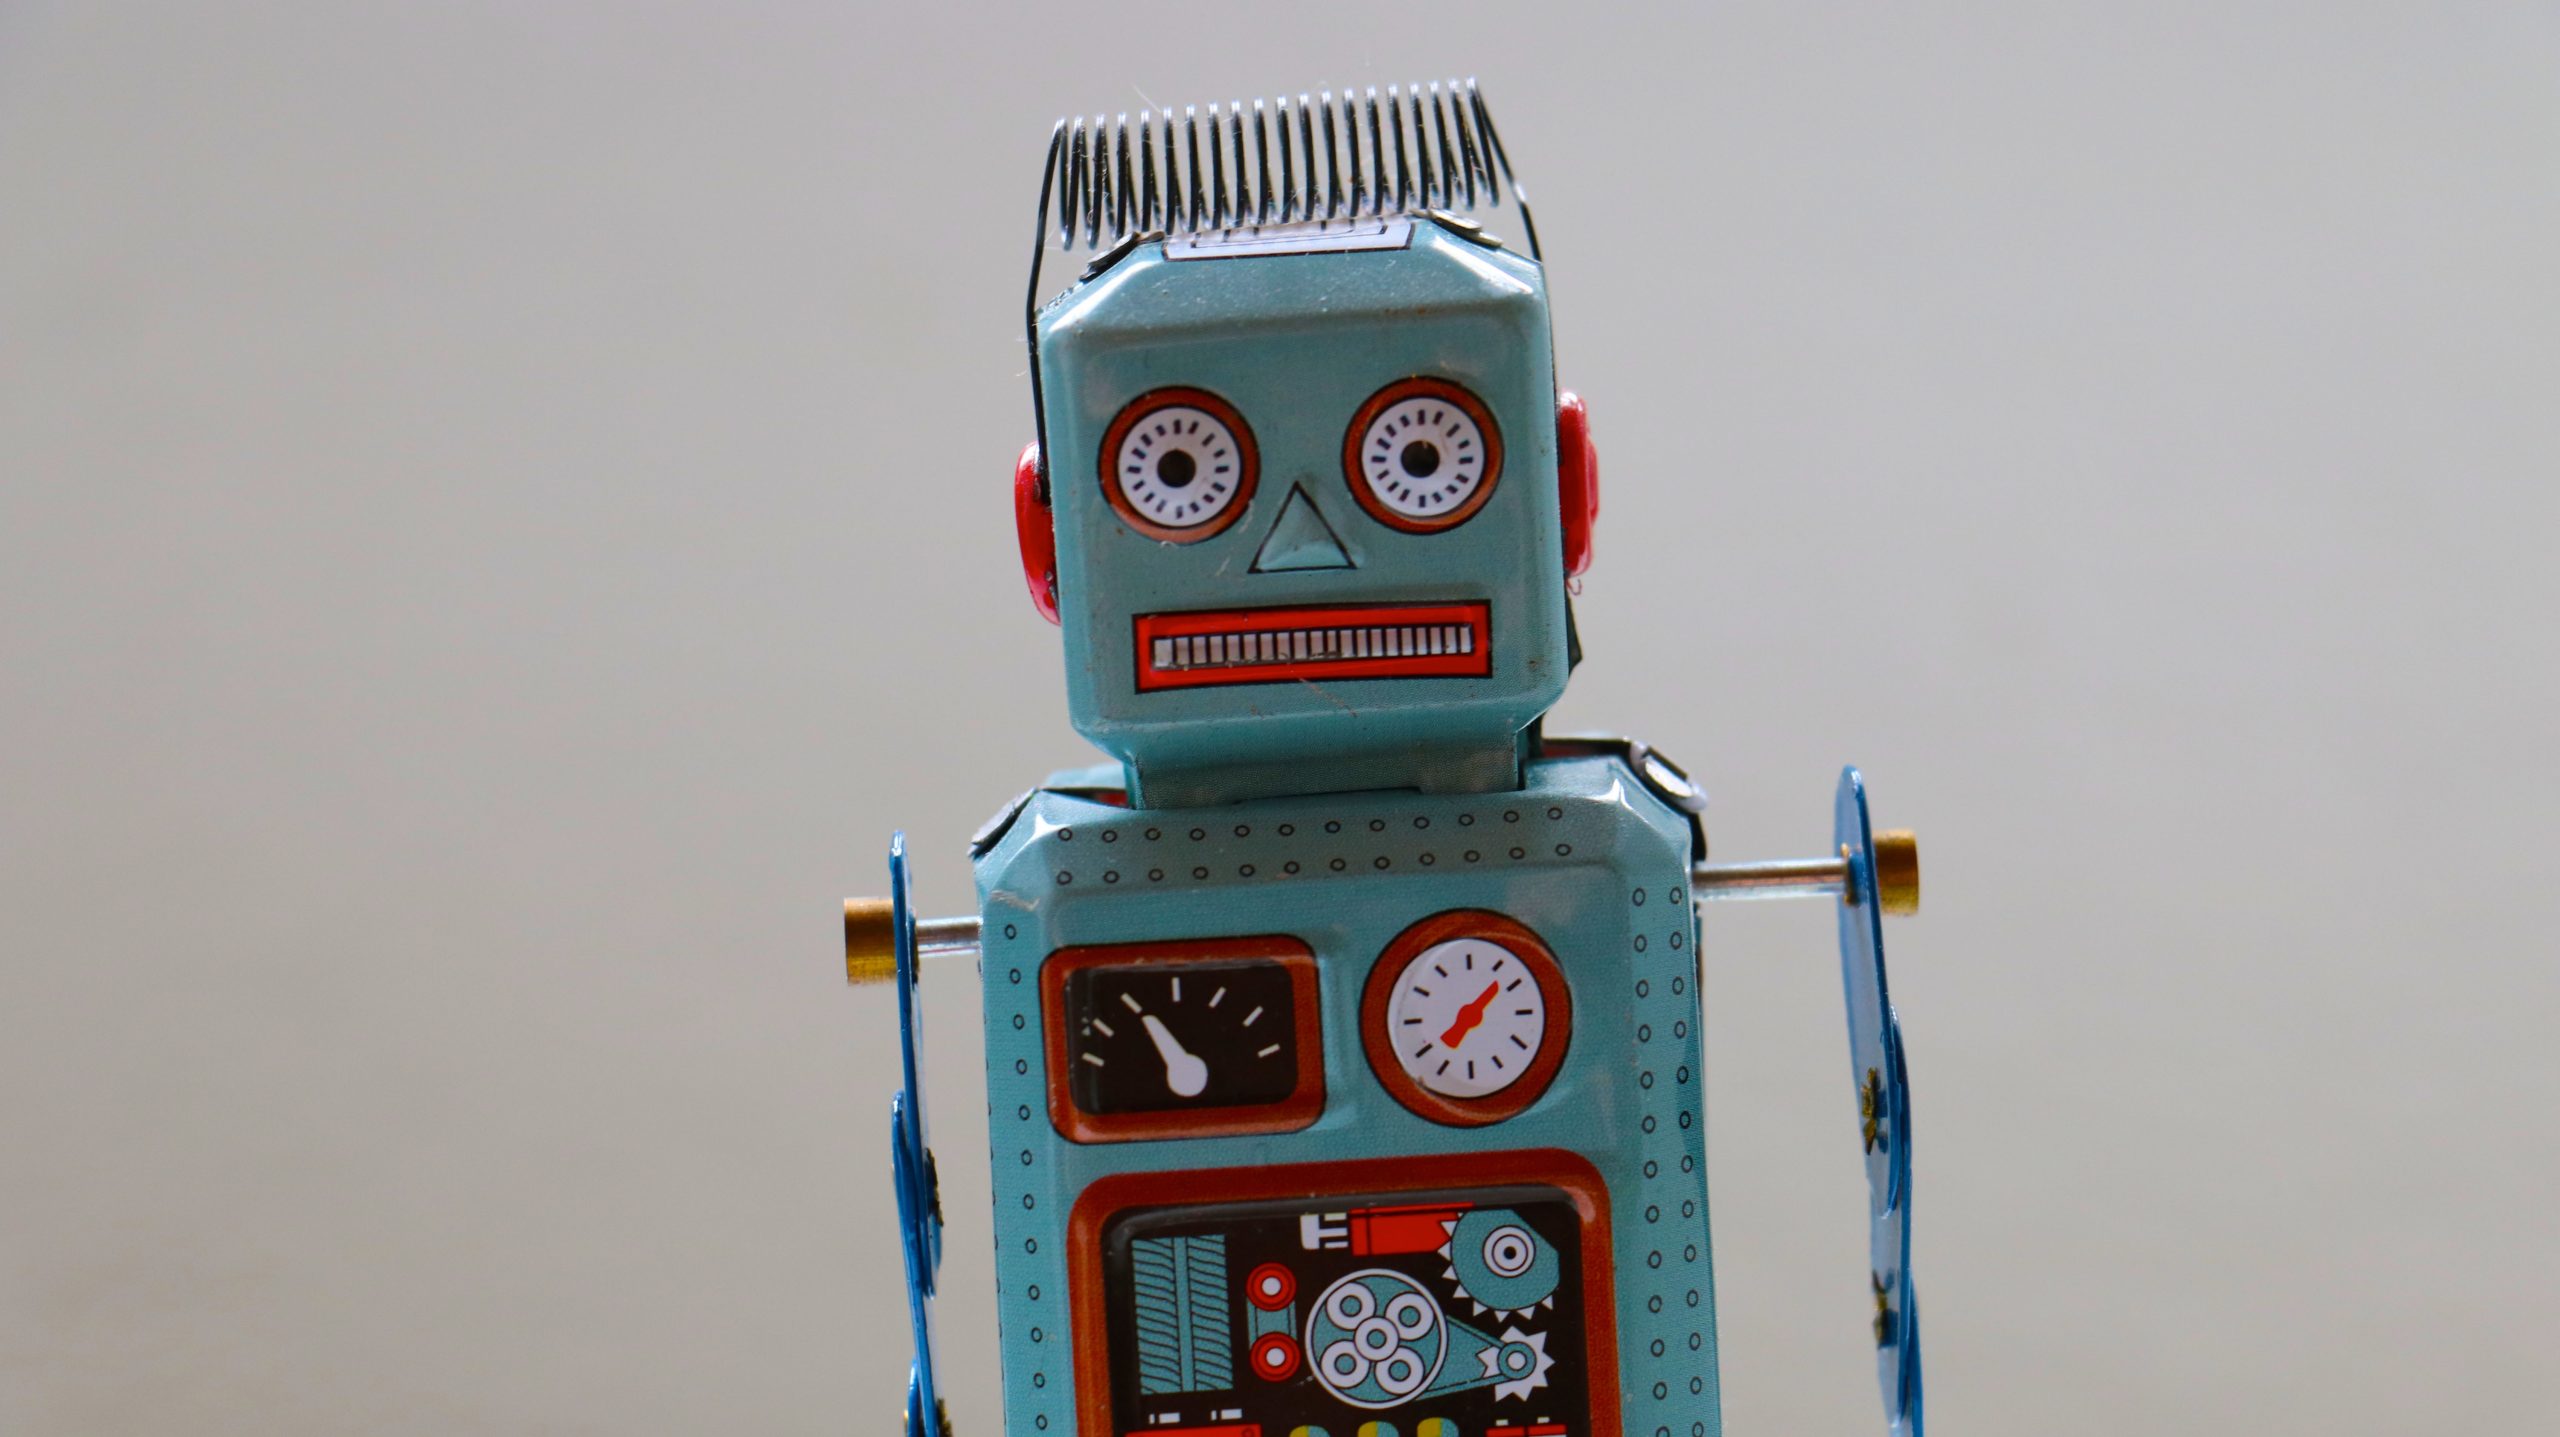 Vintage tin robot toy facing forward on a plain background.